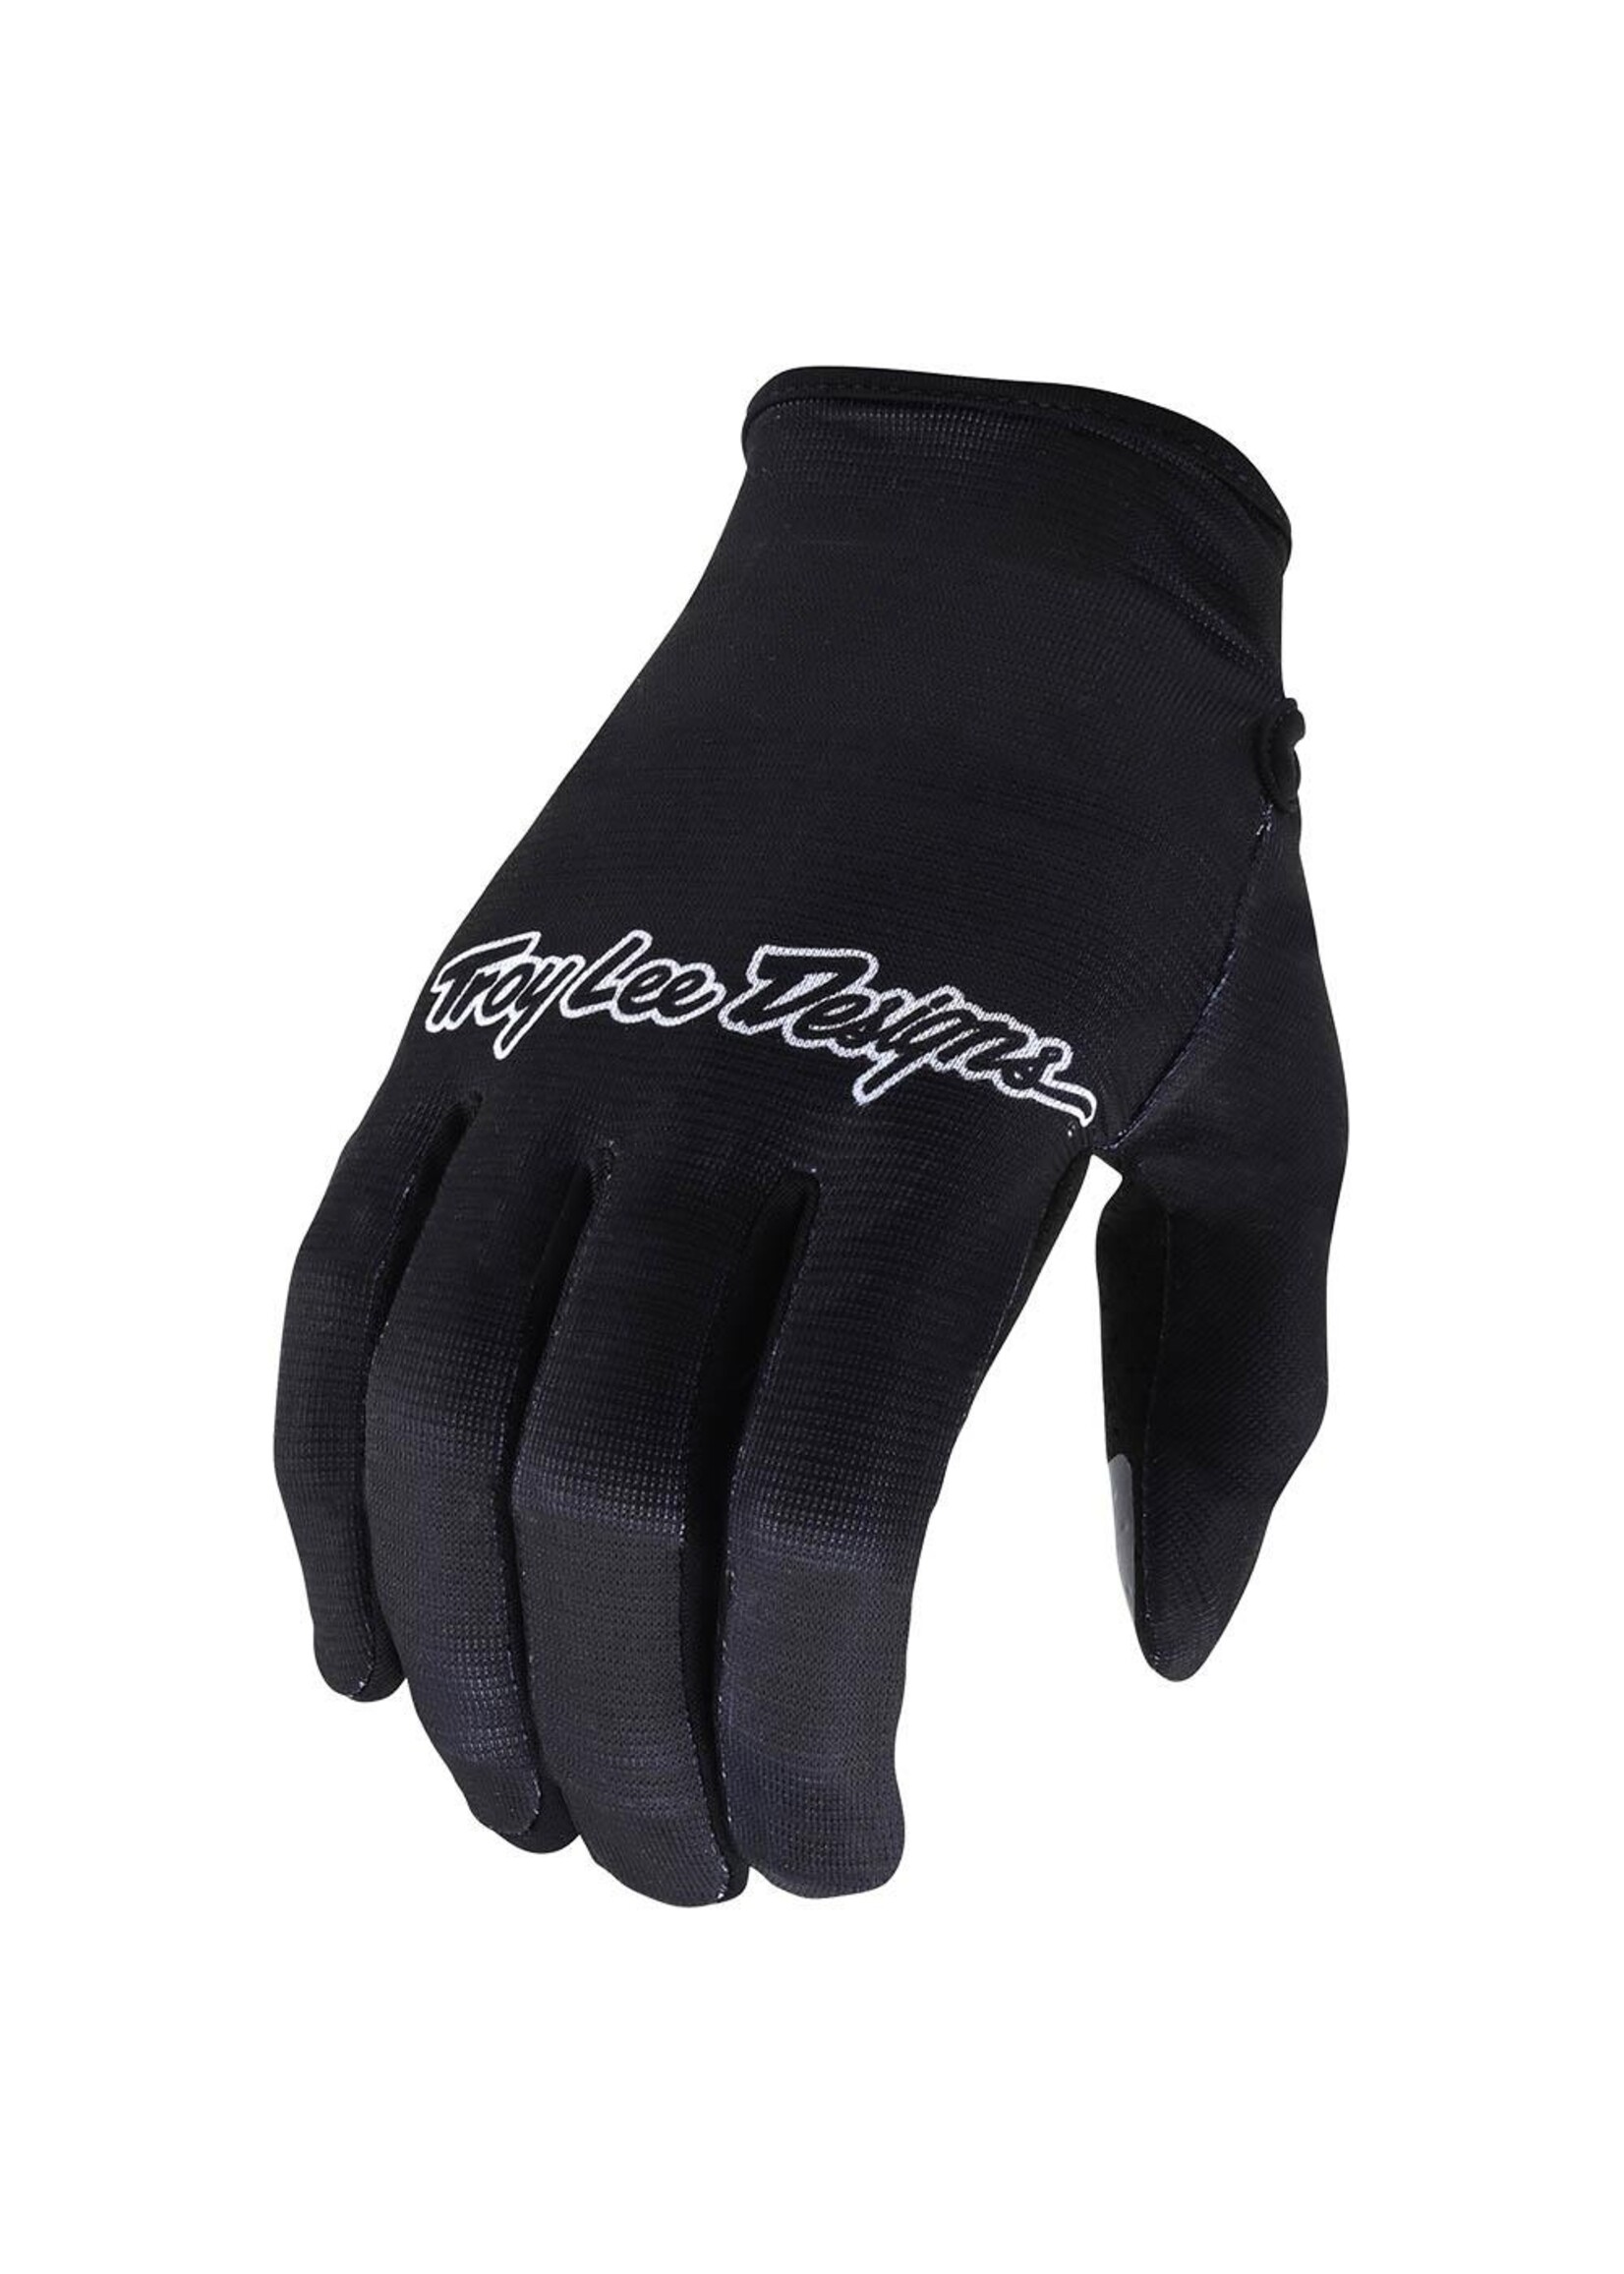 Troy Lee Designs Flowline Glove - Black